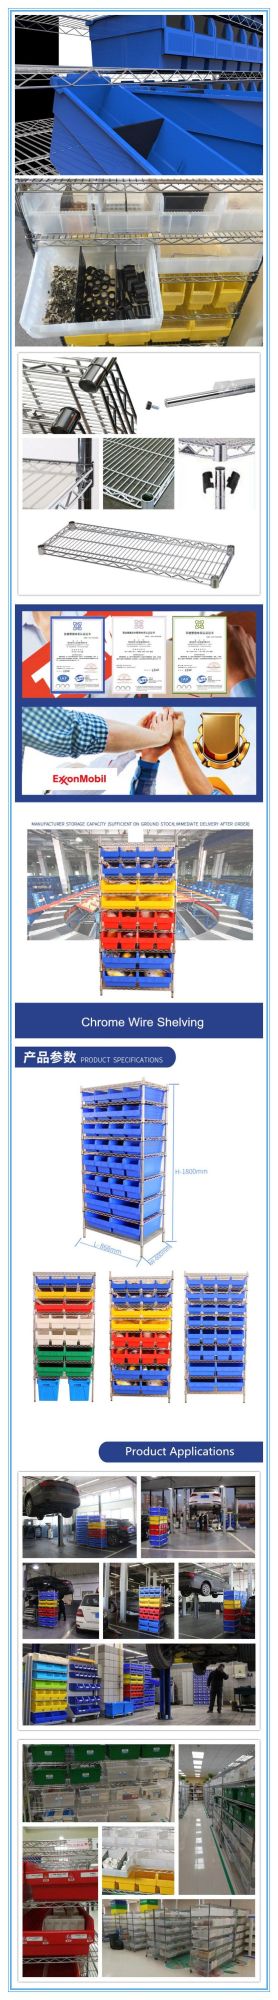 Wire Shelving Rack for Shelf Storage Bins